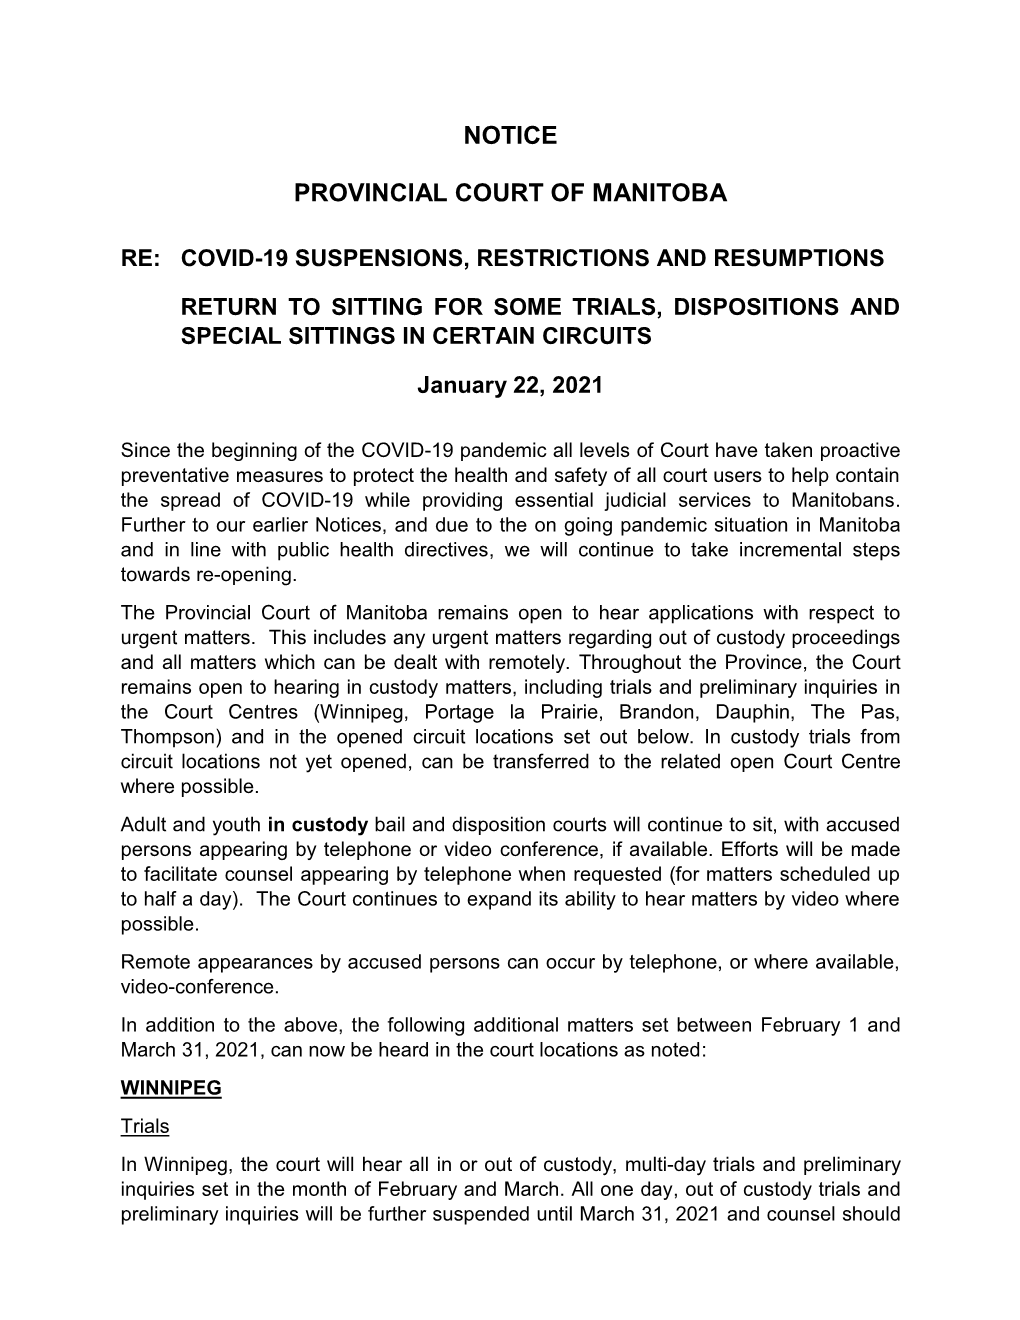 Notice Provincial Court of Manitoba